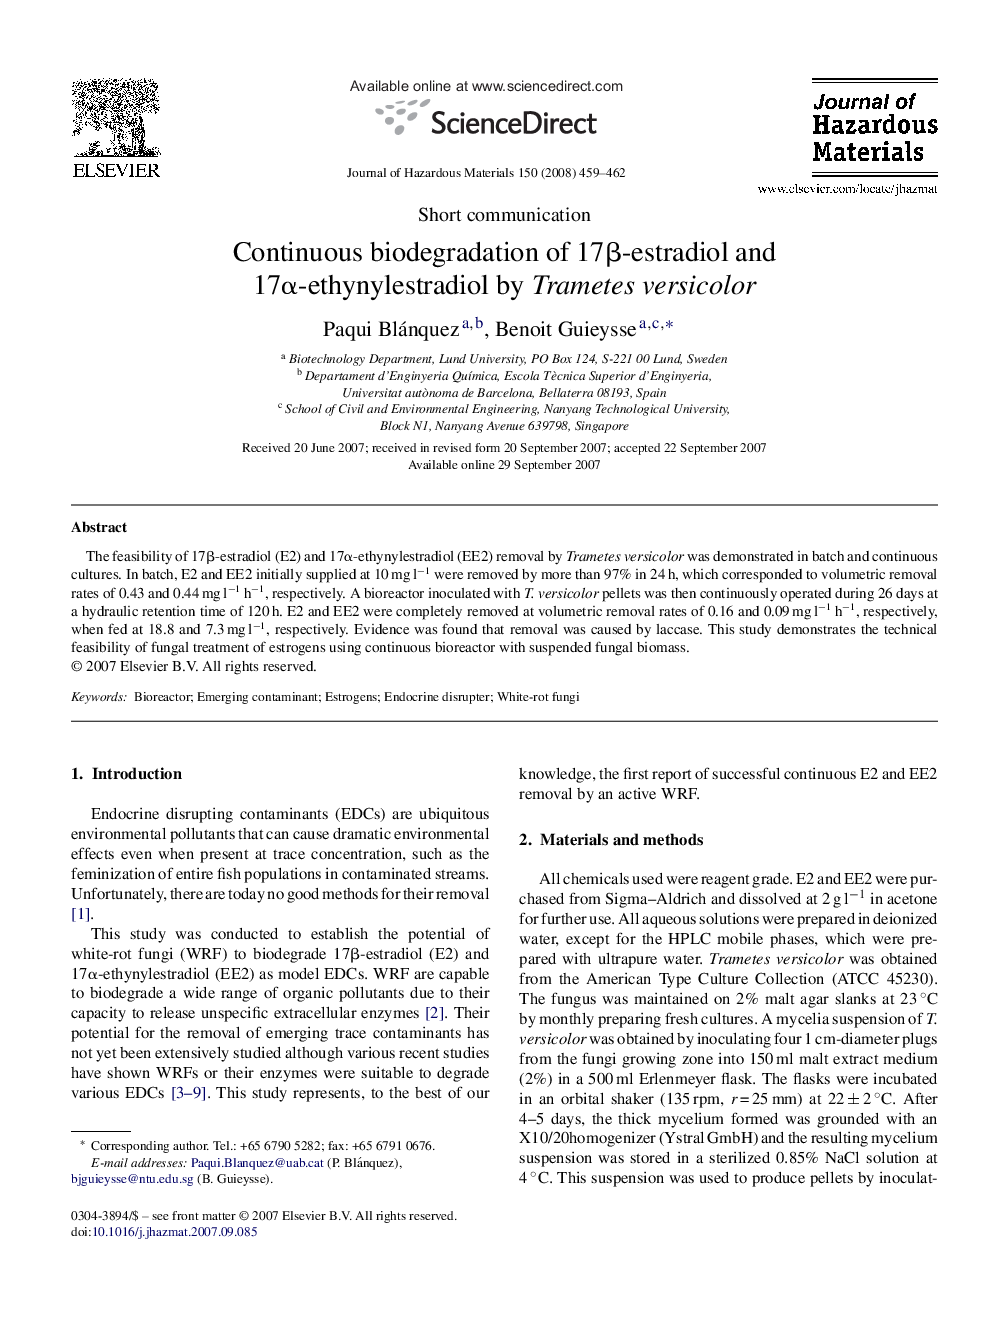 Continuous biodegradation of 17Î²-estradiol and 17Î±-ethynylestradiol by Trametes versicolor